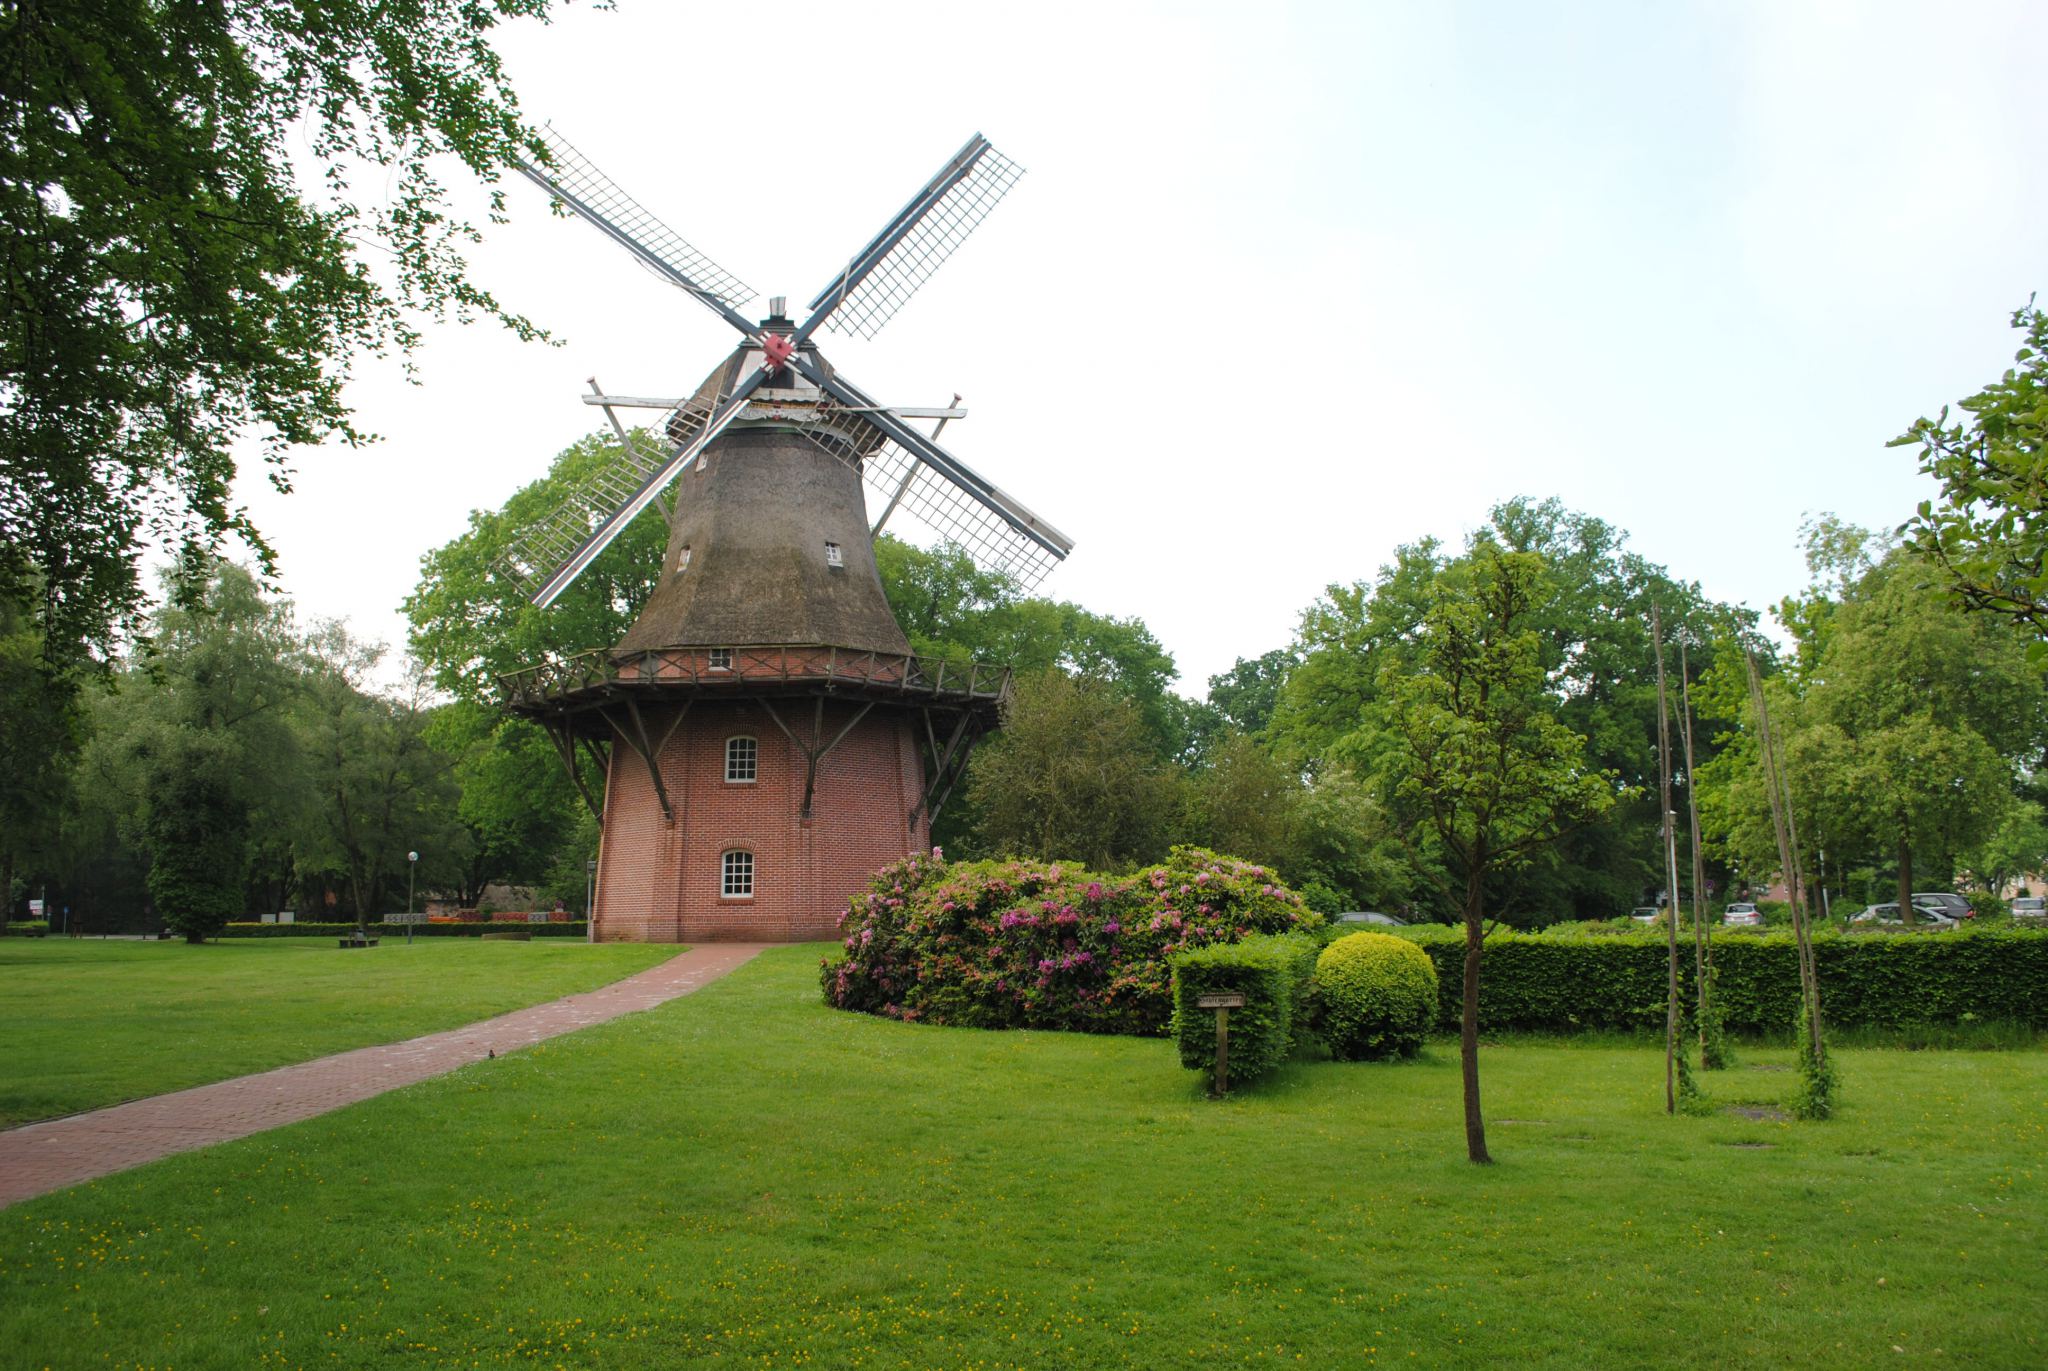 Windmühle im Kurpark  - ©Joke Pouliart